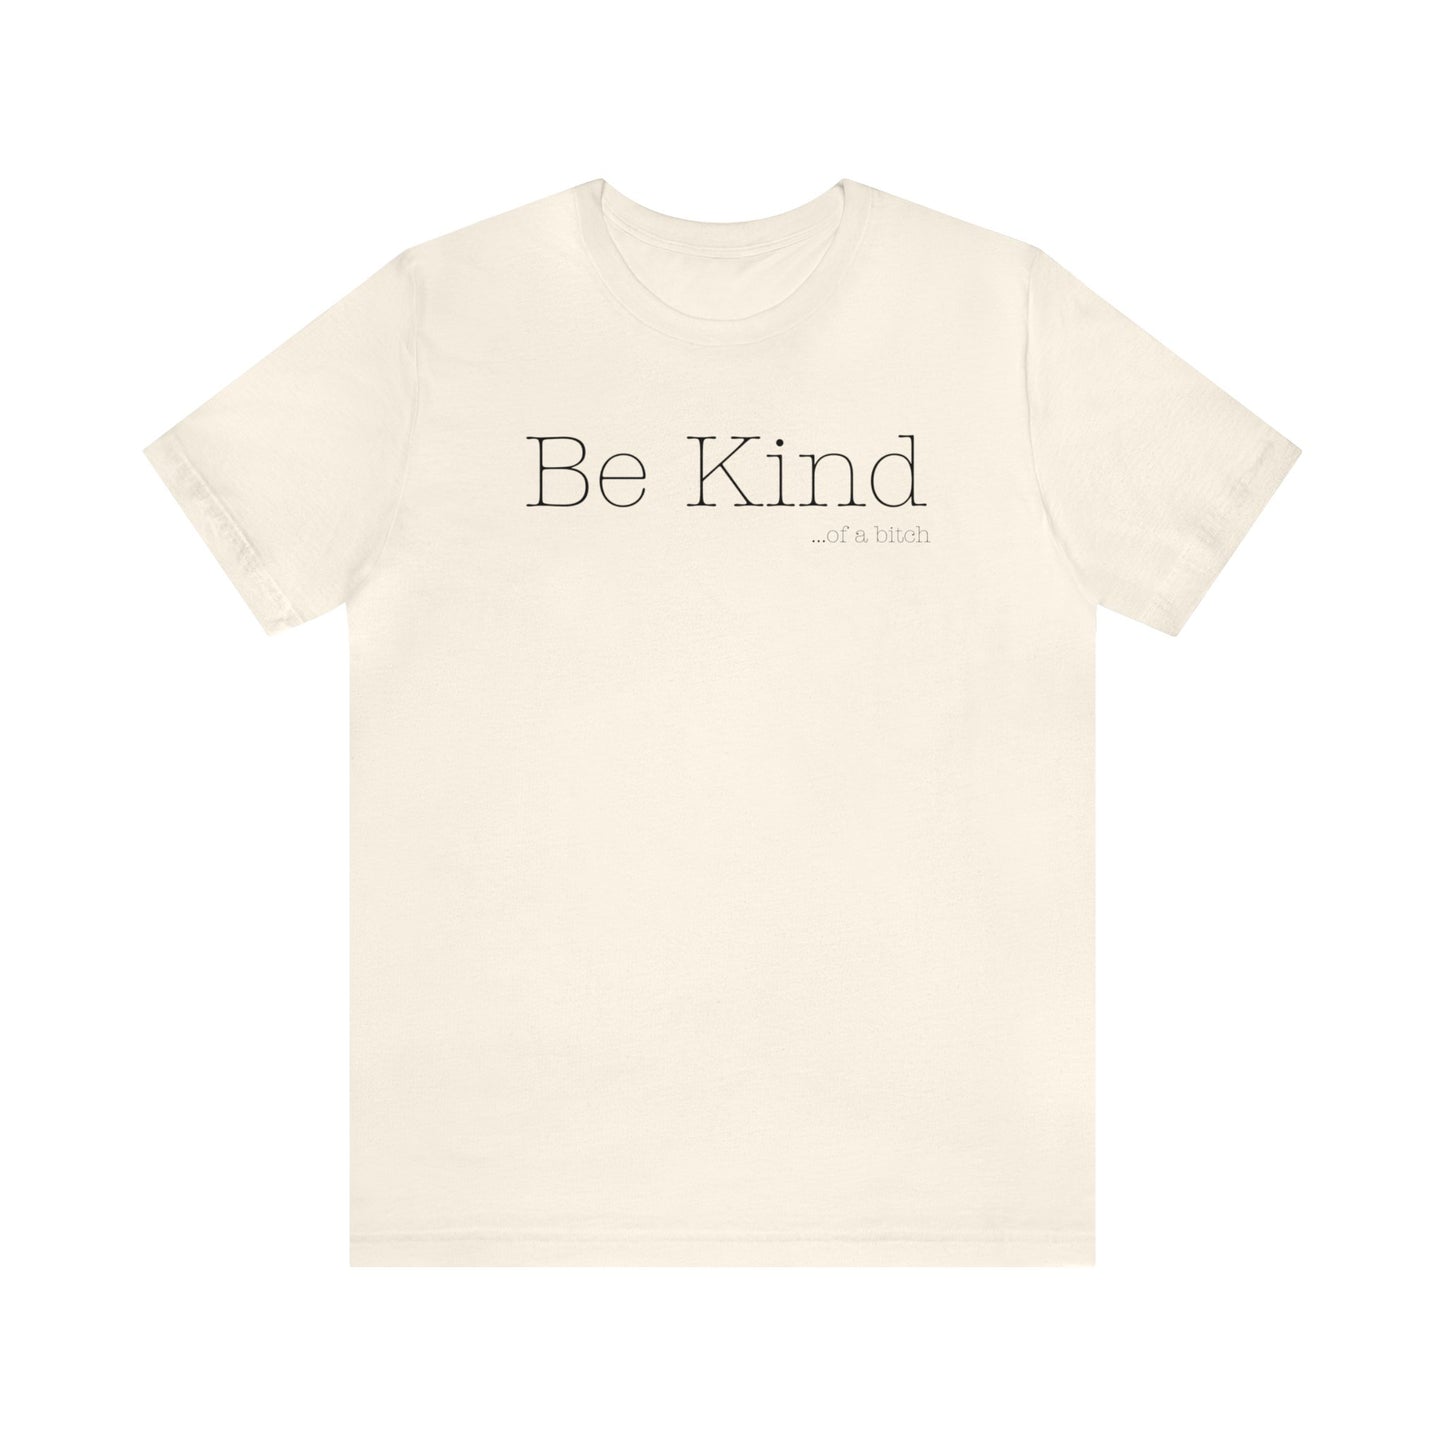 Be Kind...of a Bitch (Black Font)